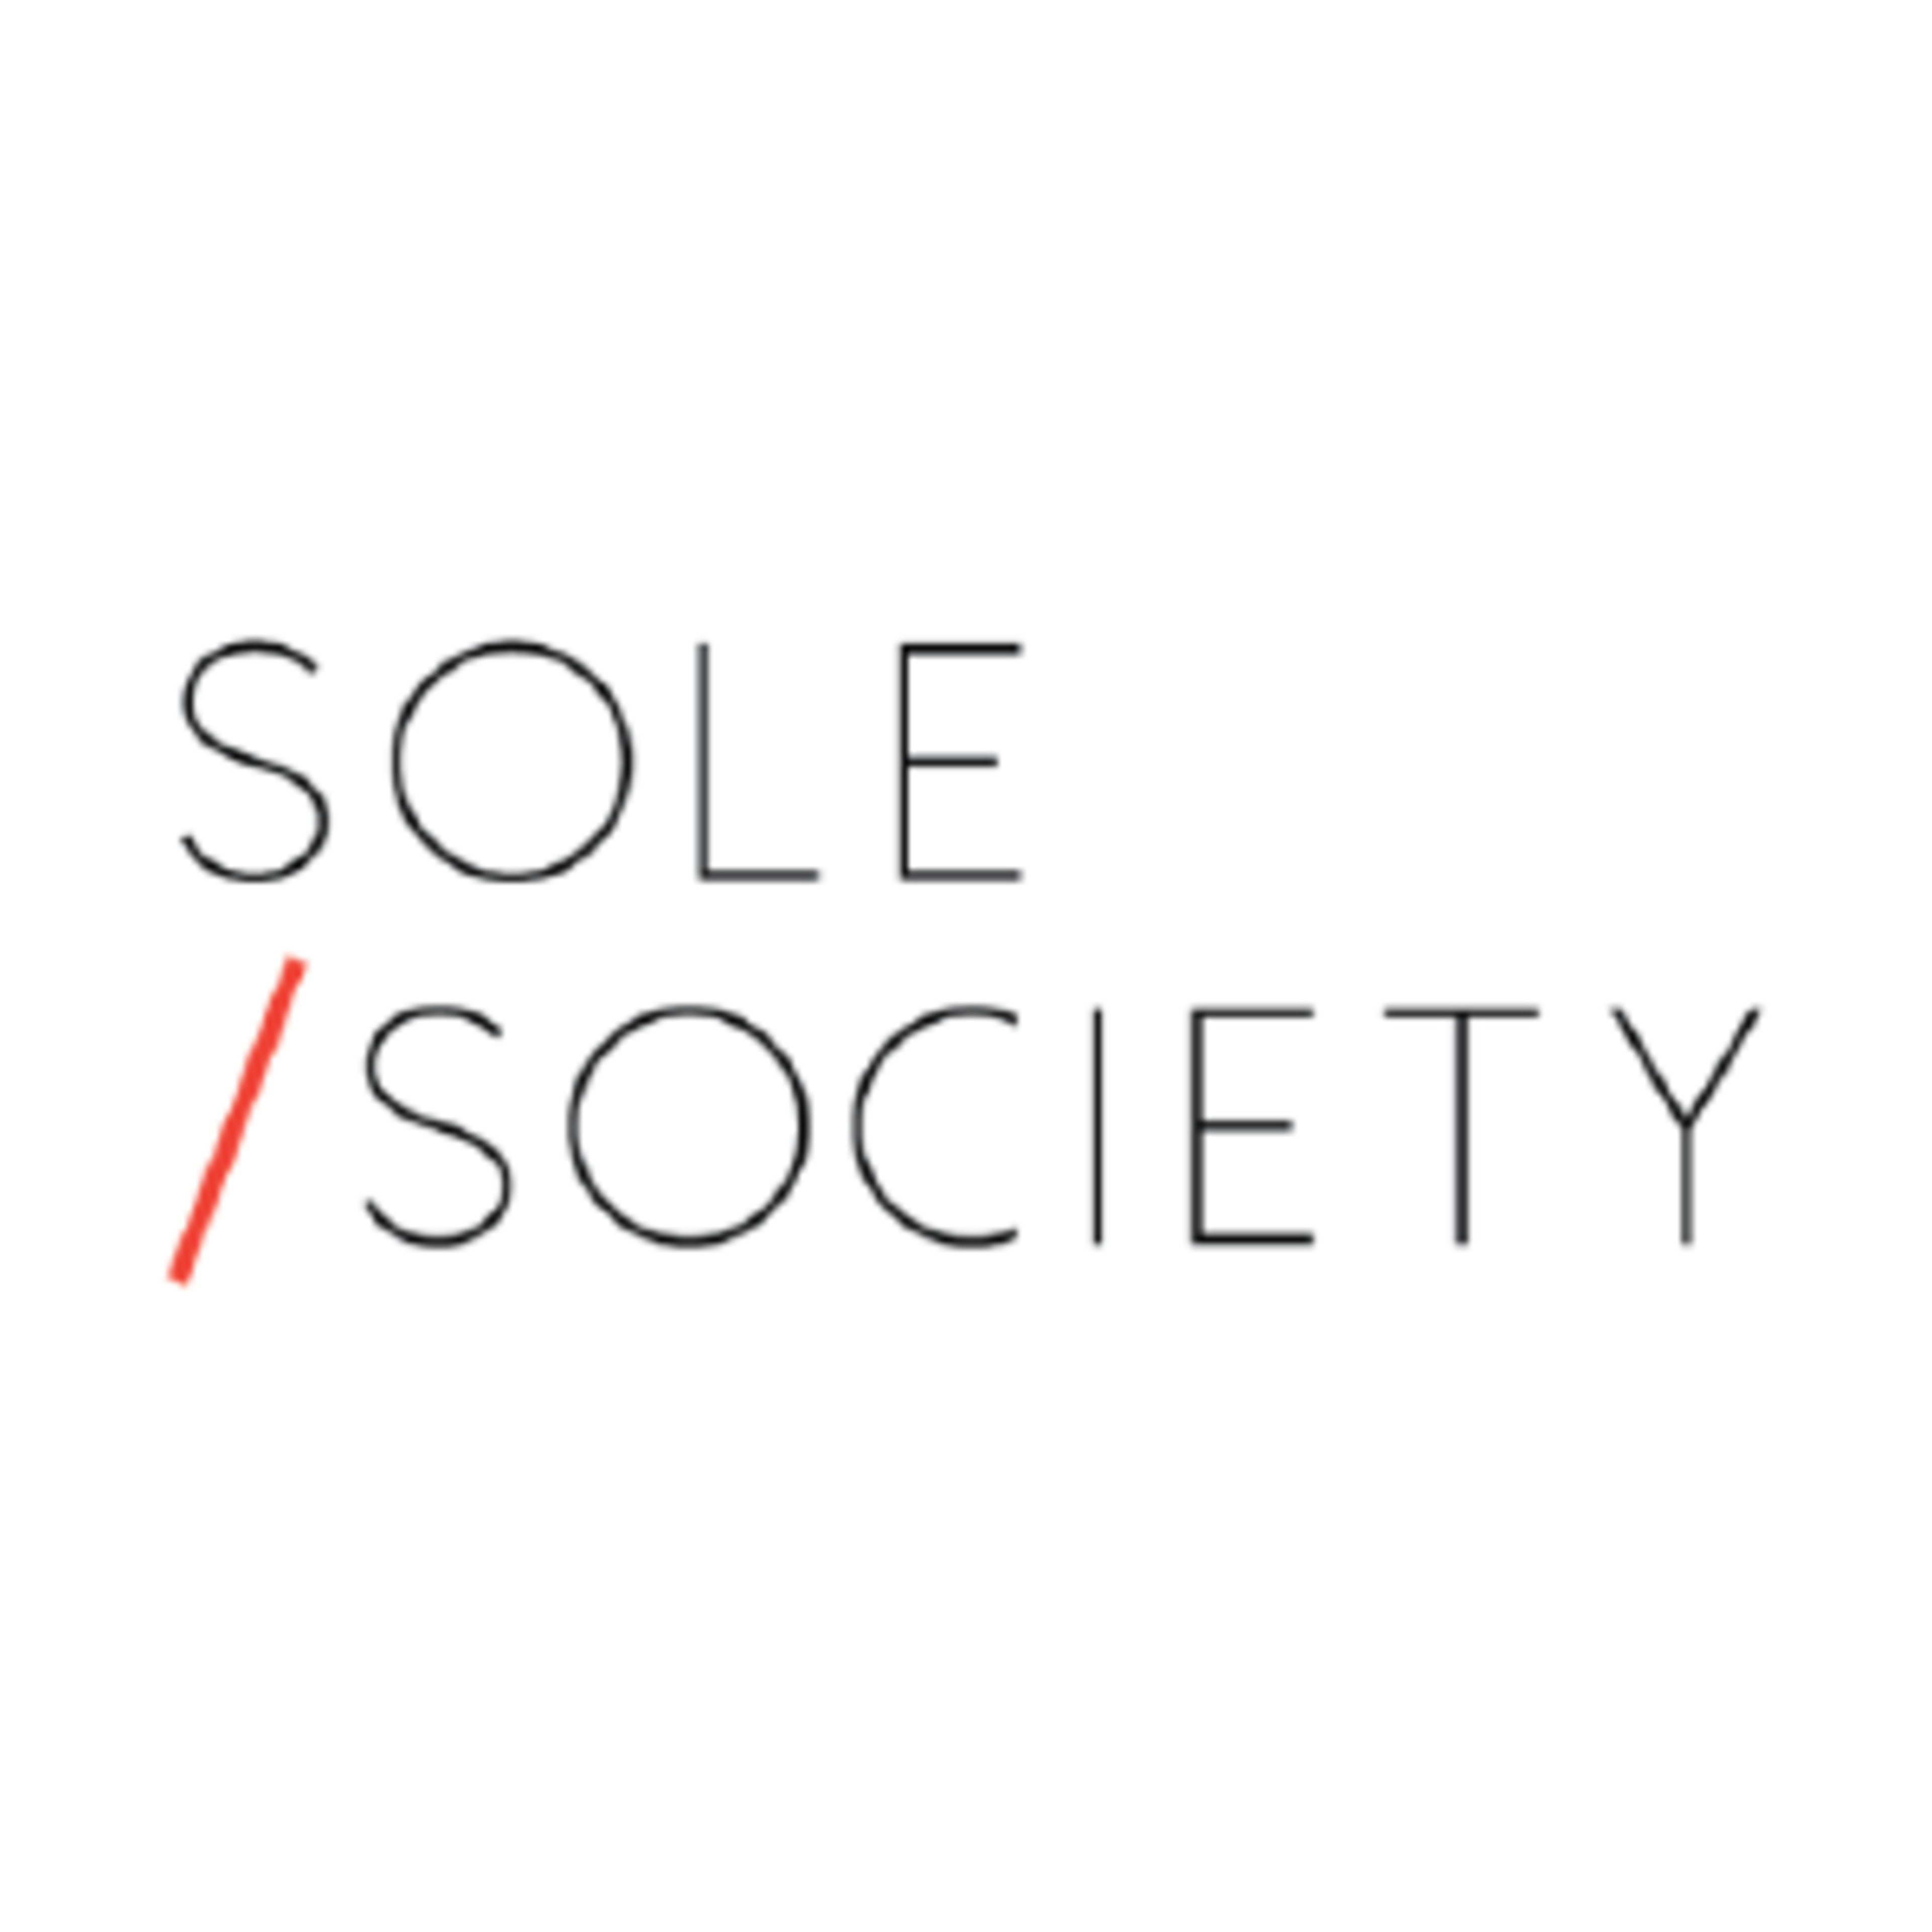 Sole SocietyCode